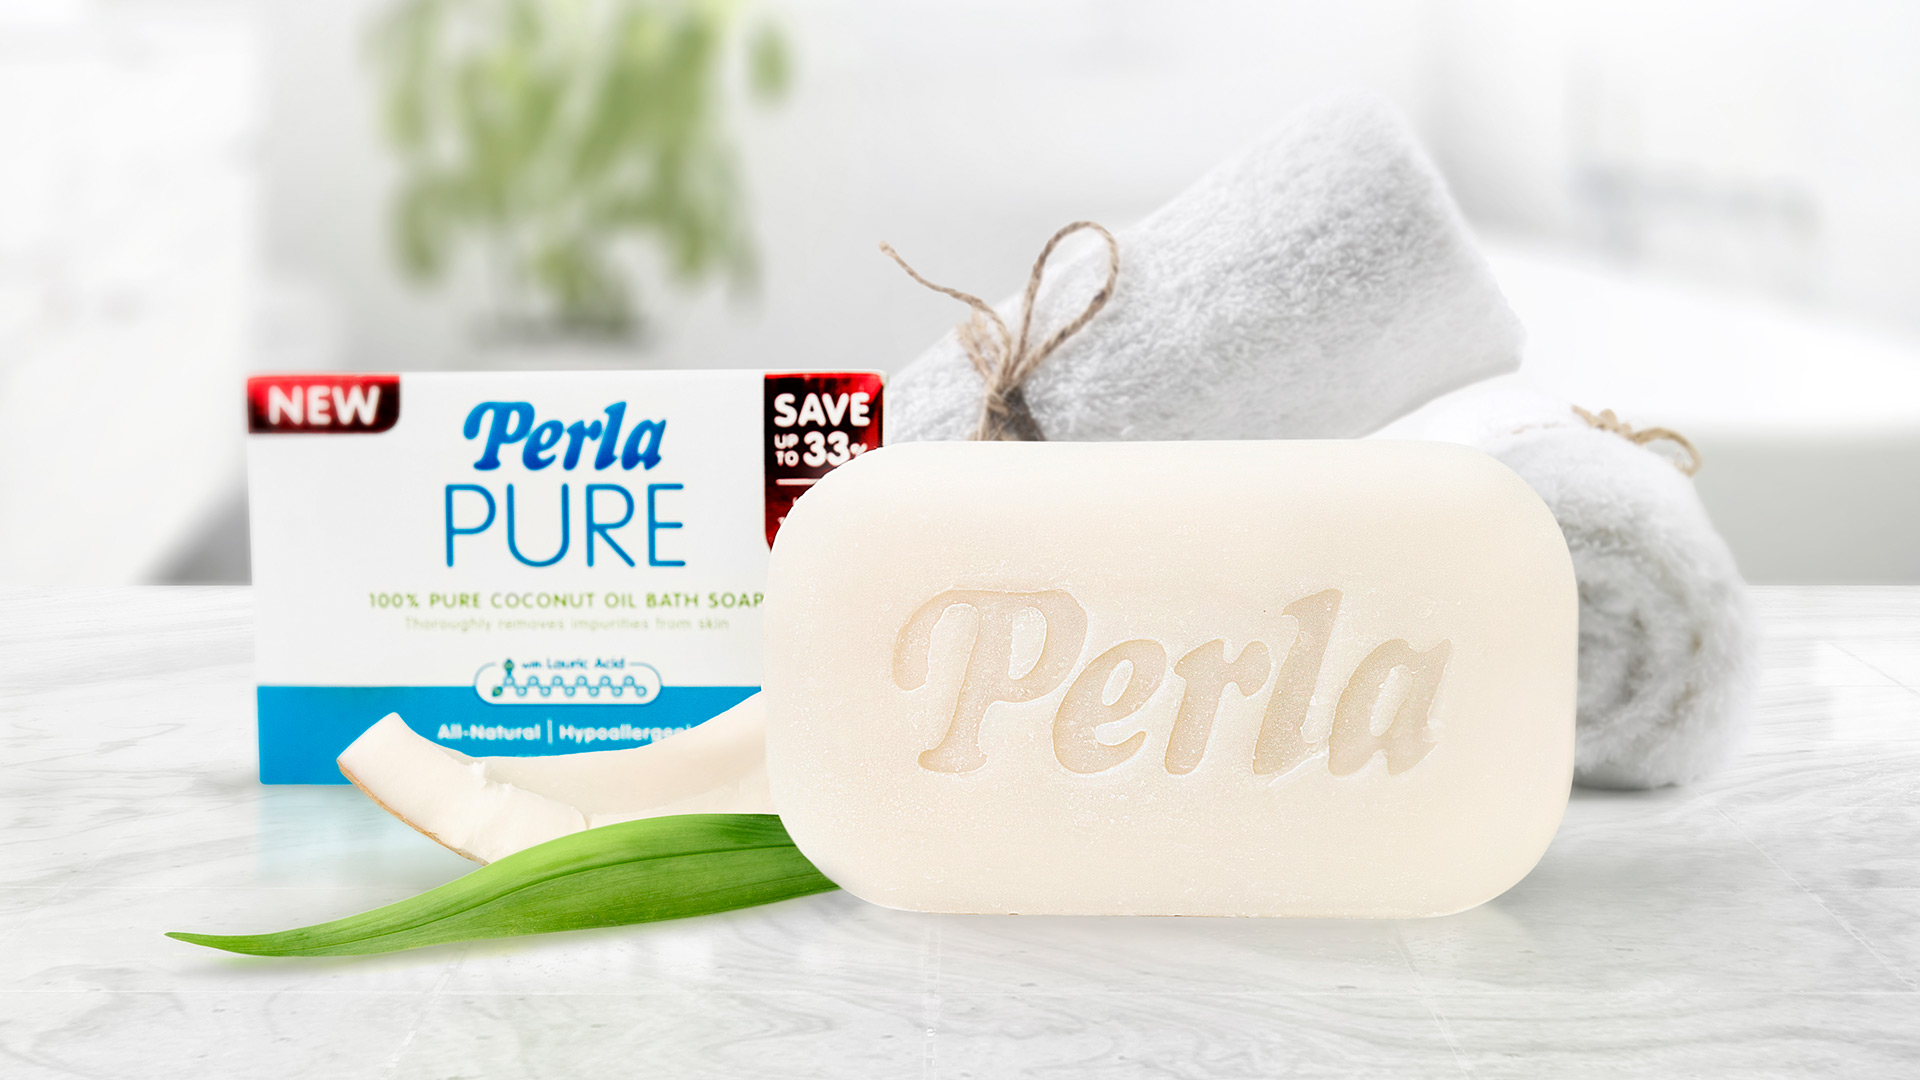 Perla Pure 100% Pure Coconut Oil Bath Soap with Lauric Acid